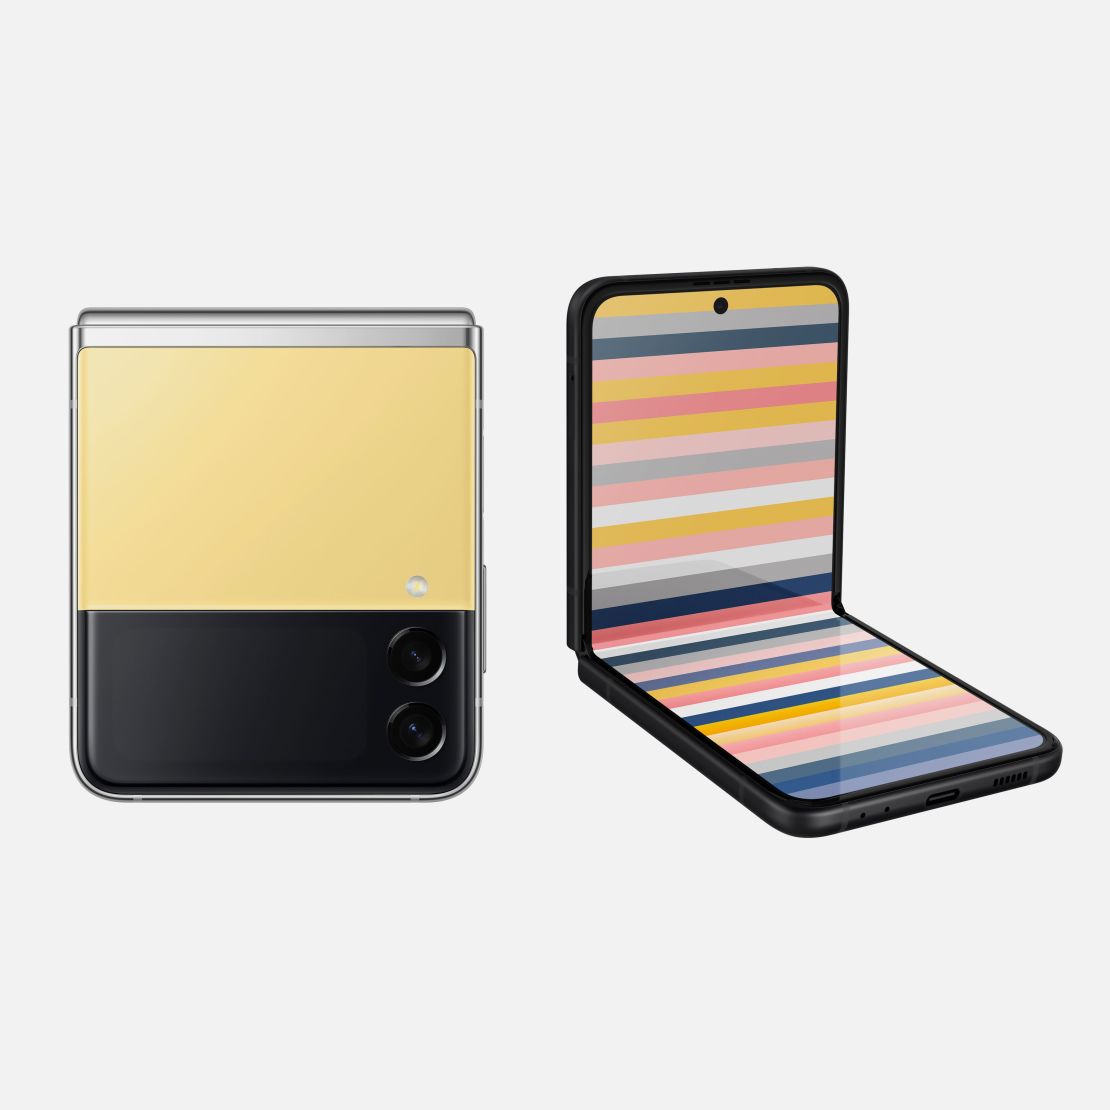 Samsung's new customizable Flip 3 smartphone